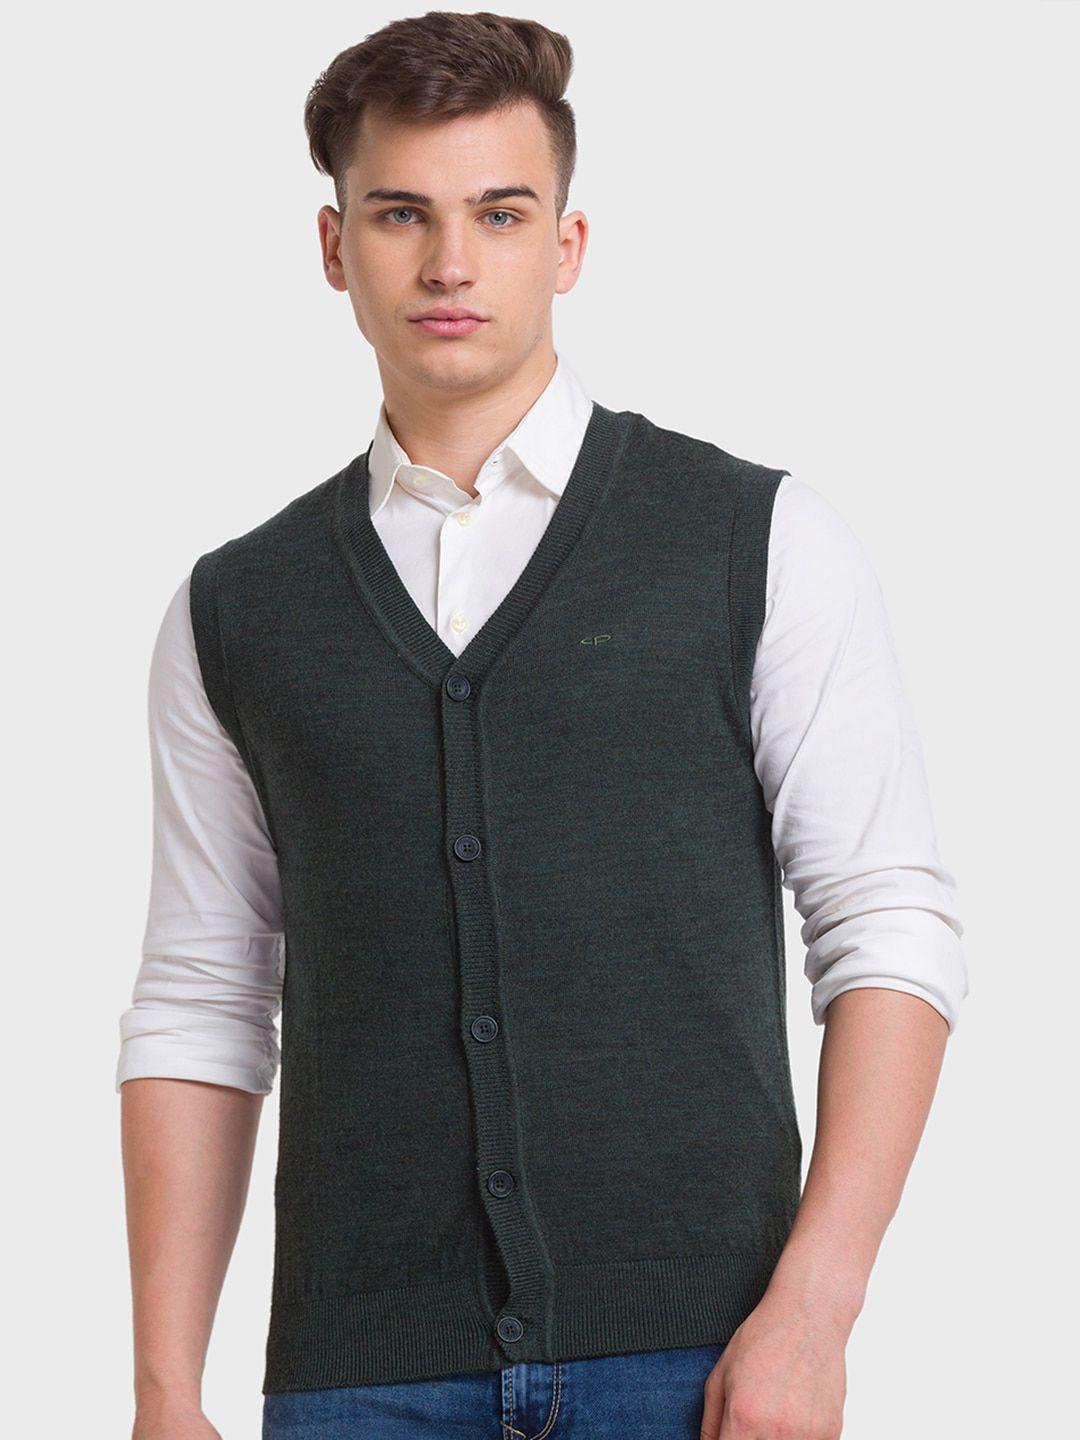 colorplus-men-v-neck-wool-sweater-vest